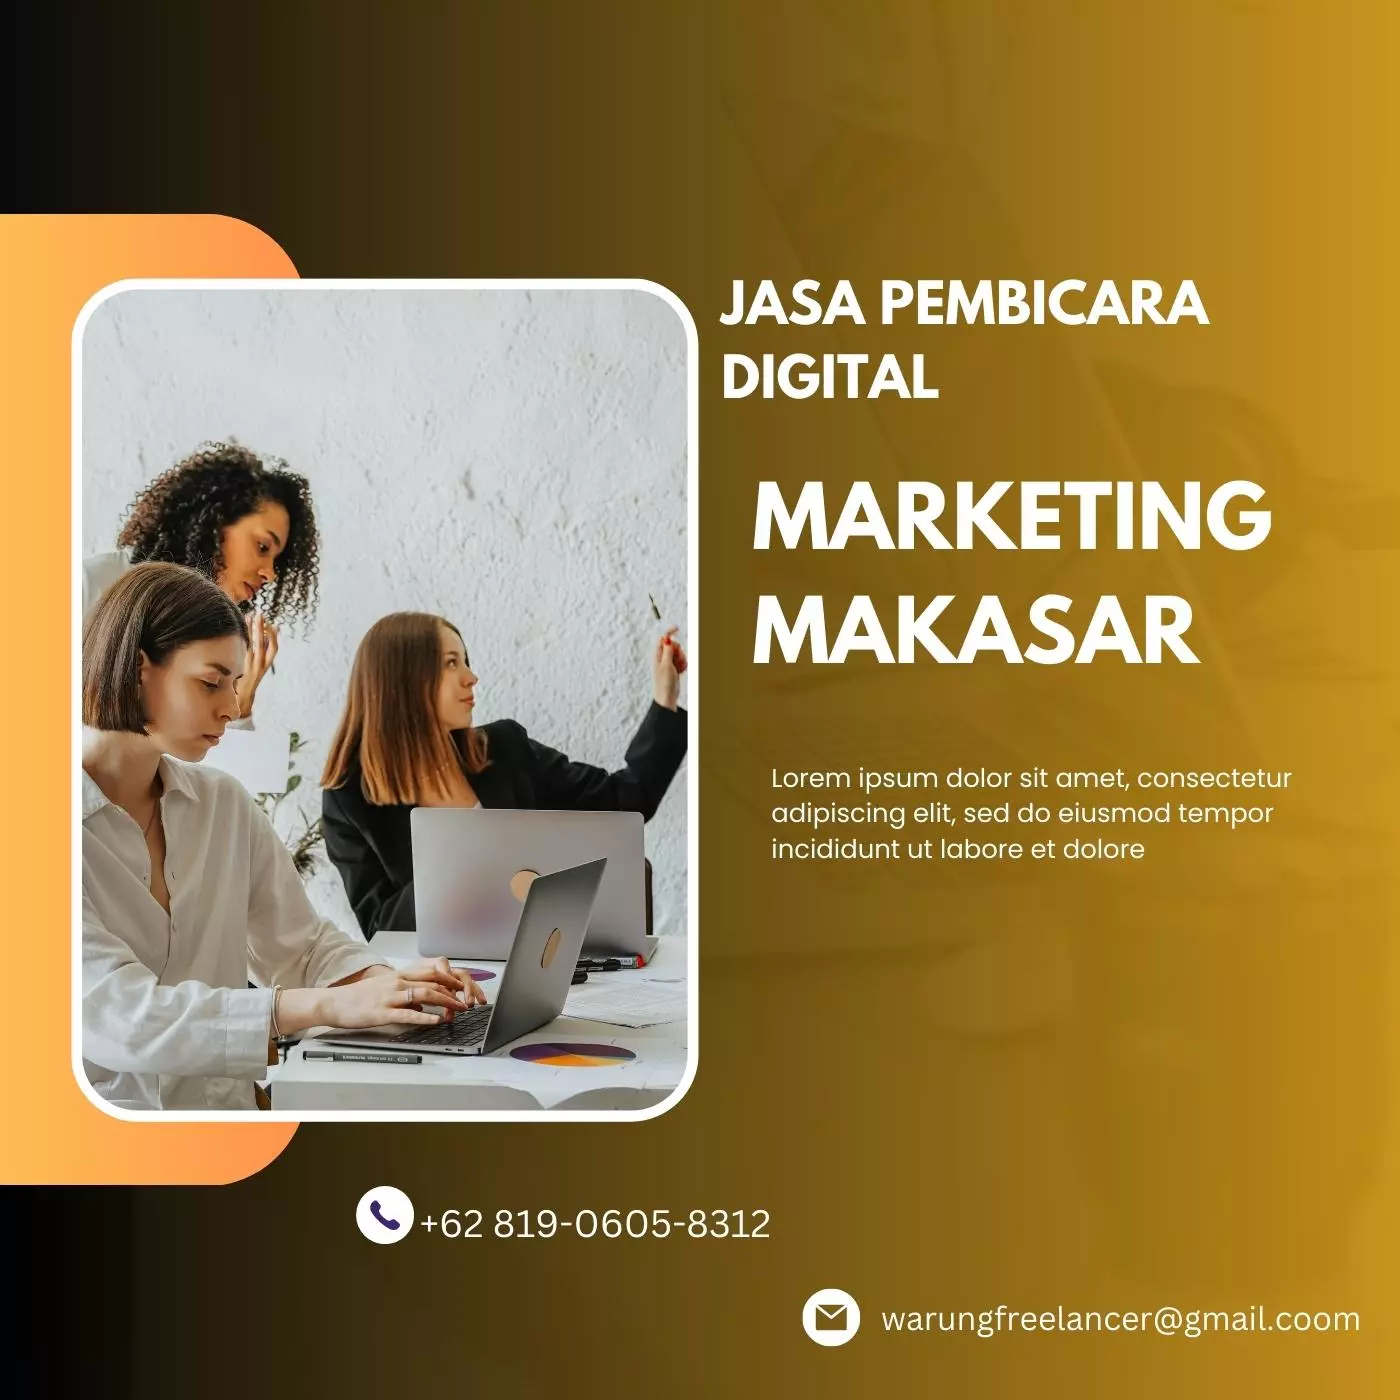 Makassar Digital Marketing Speaker Services